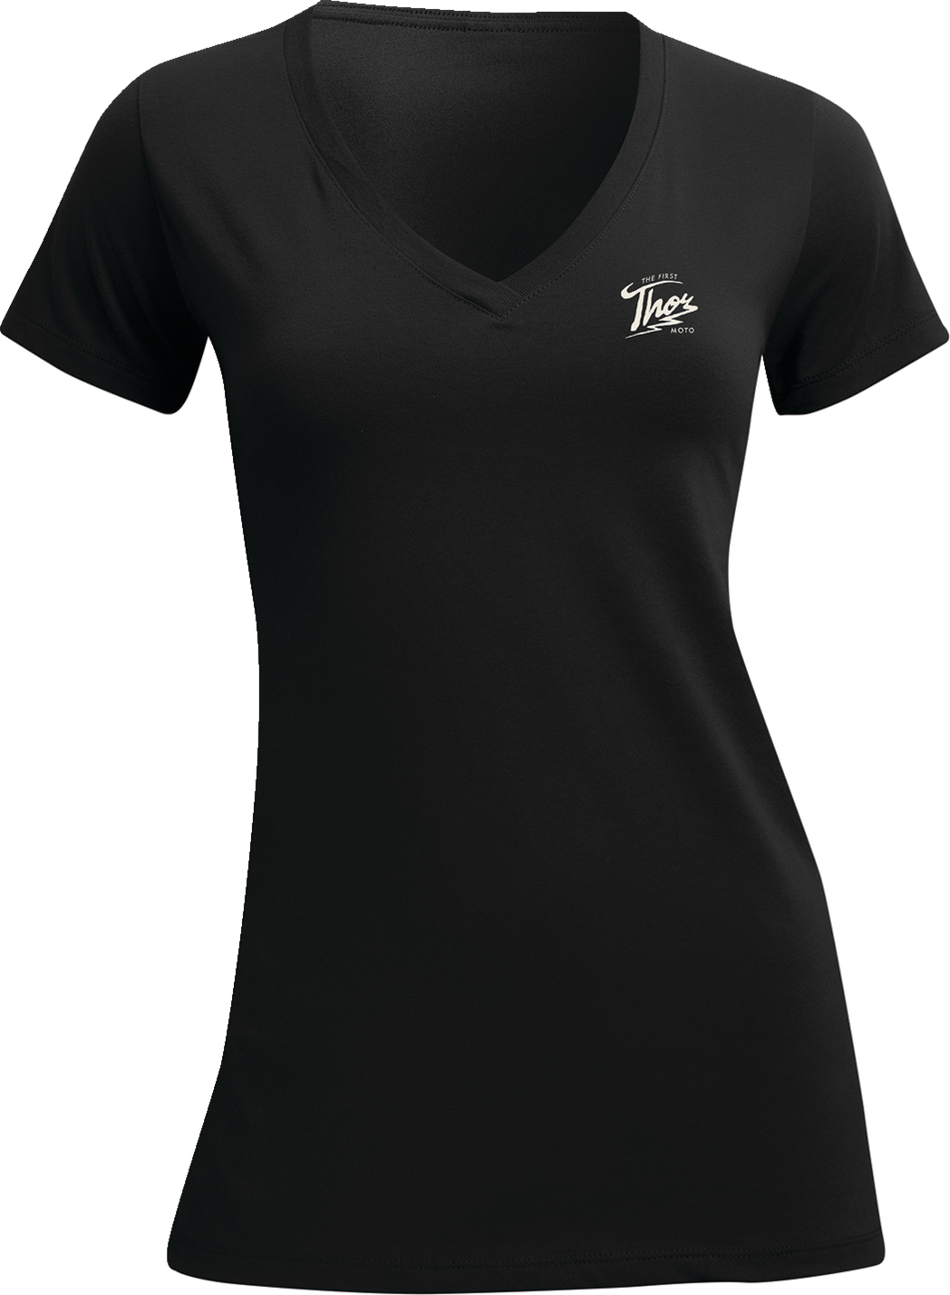 THOR Women's Thunder T-Shirt - Black - Small 3031-4114